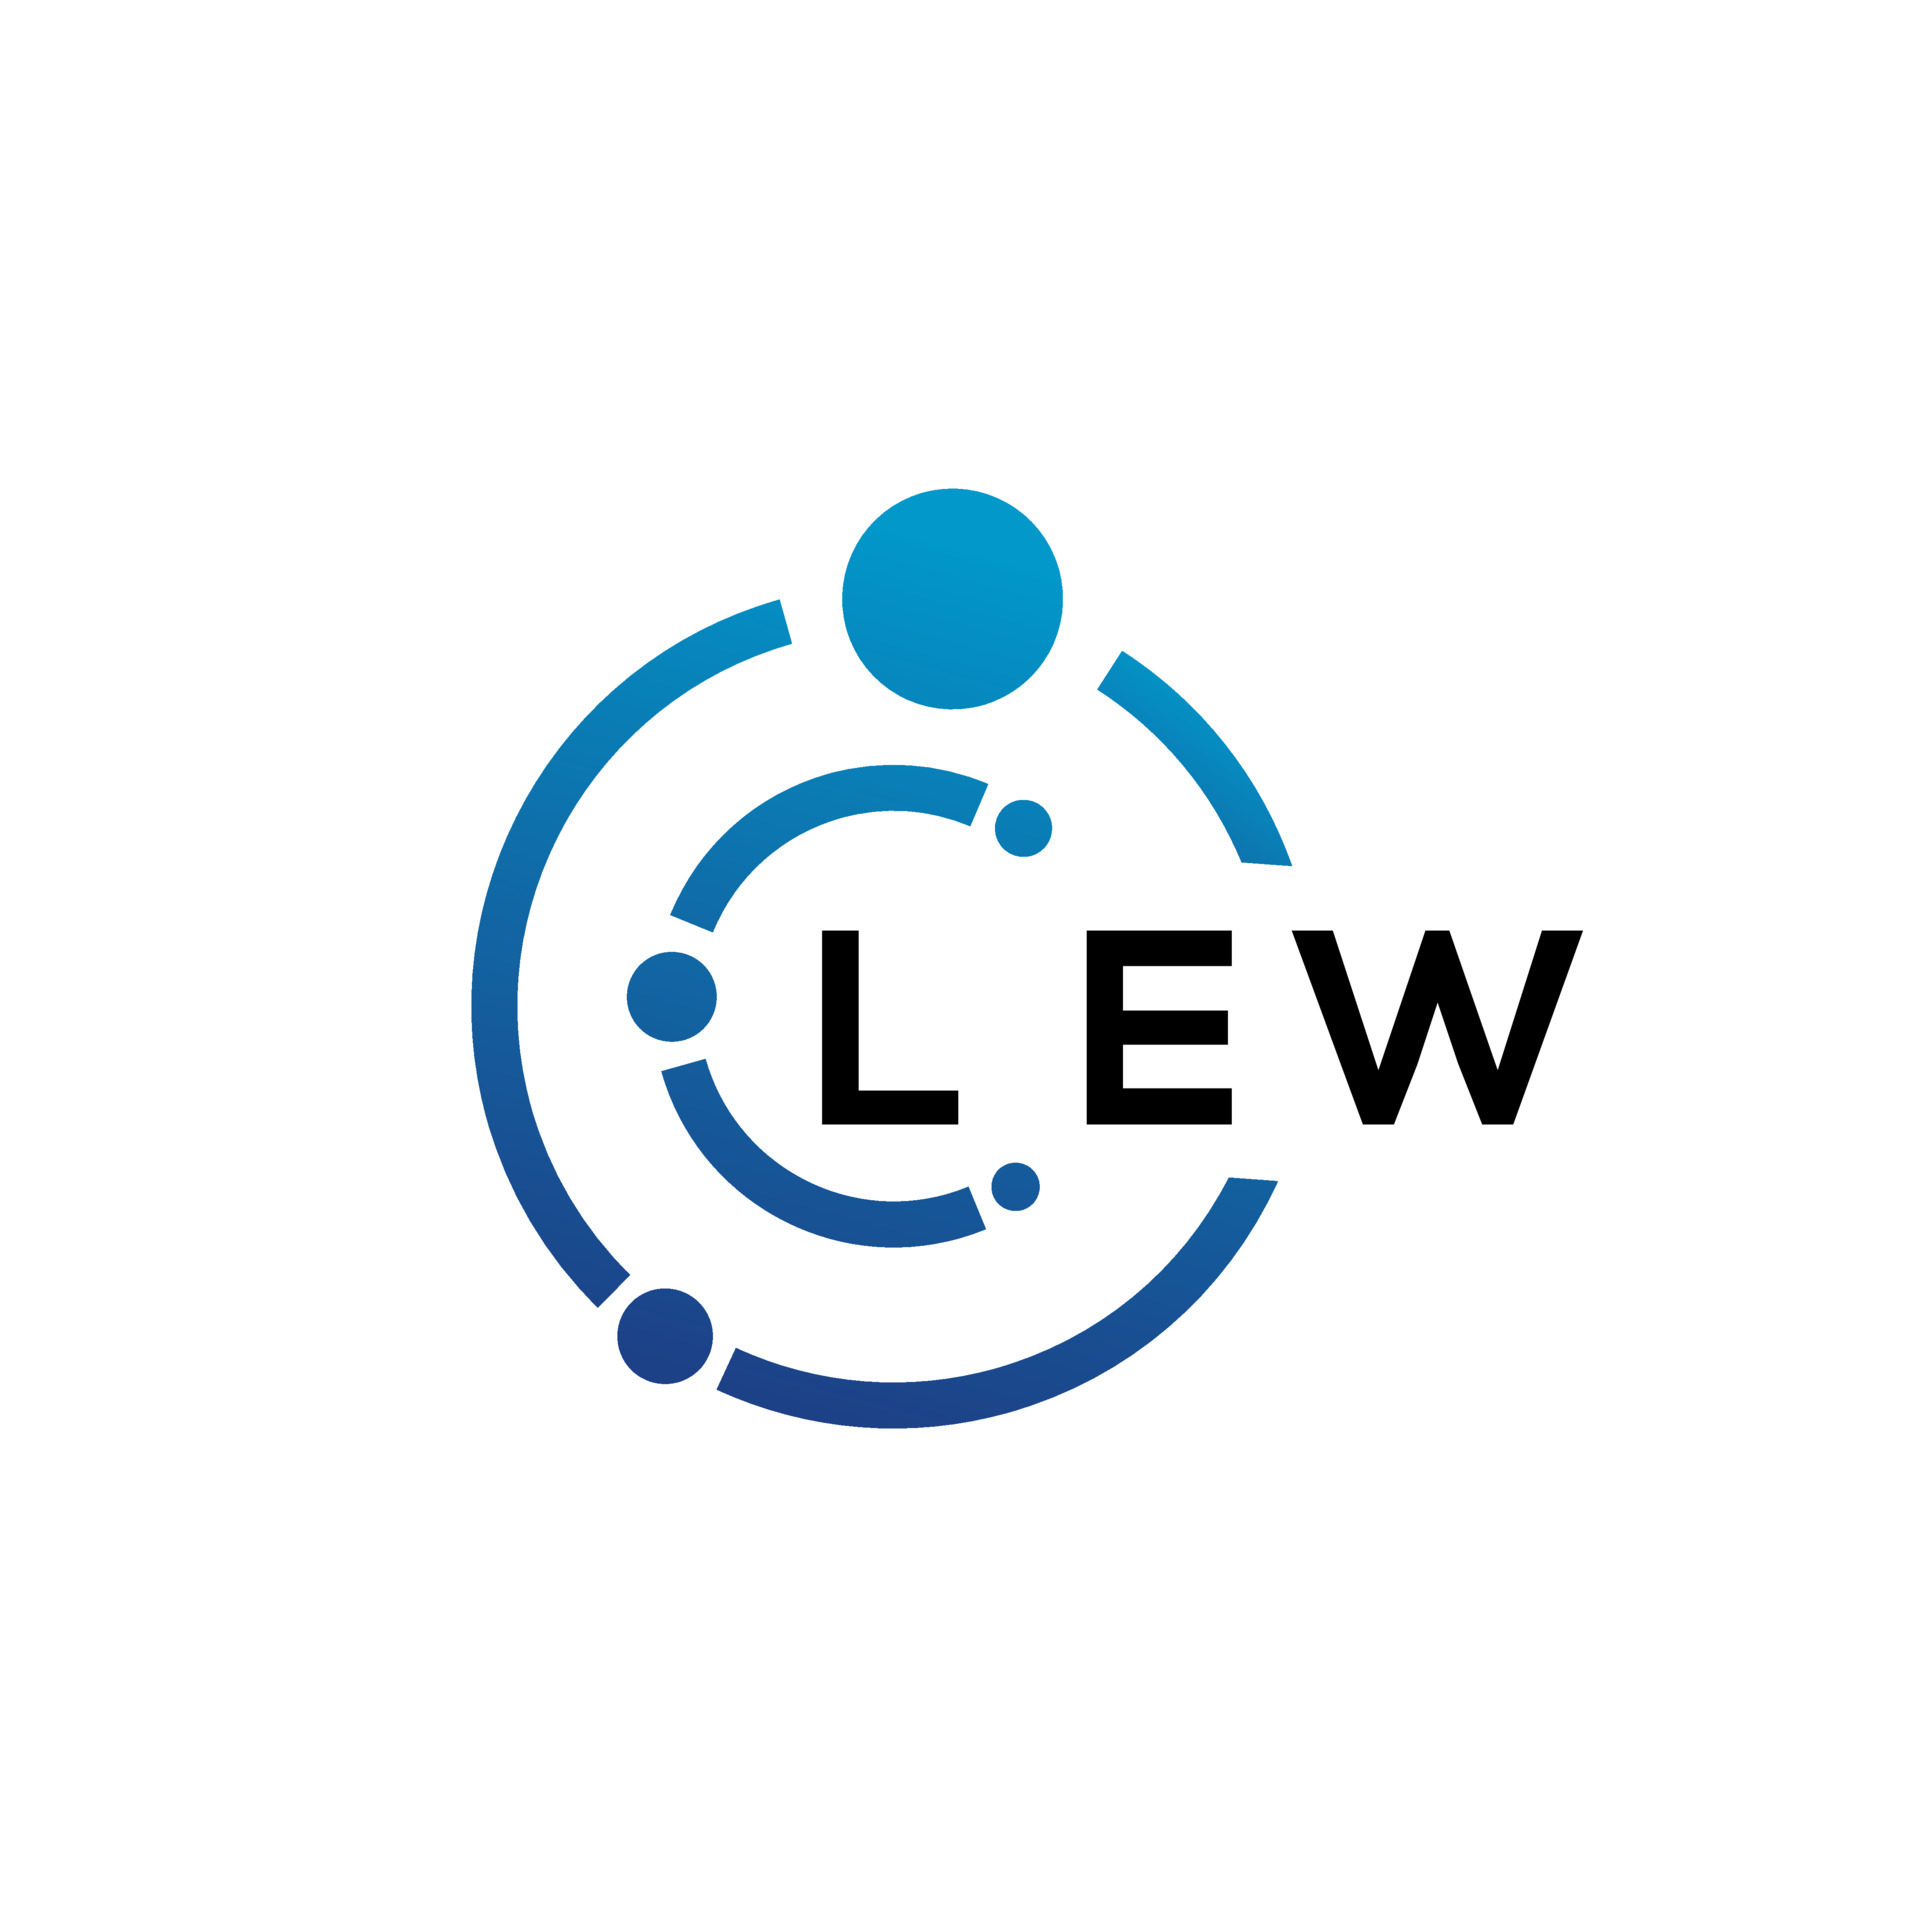 LEW letter technology logo design on white background. LEW